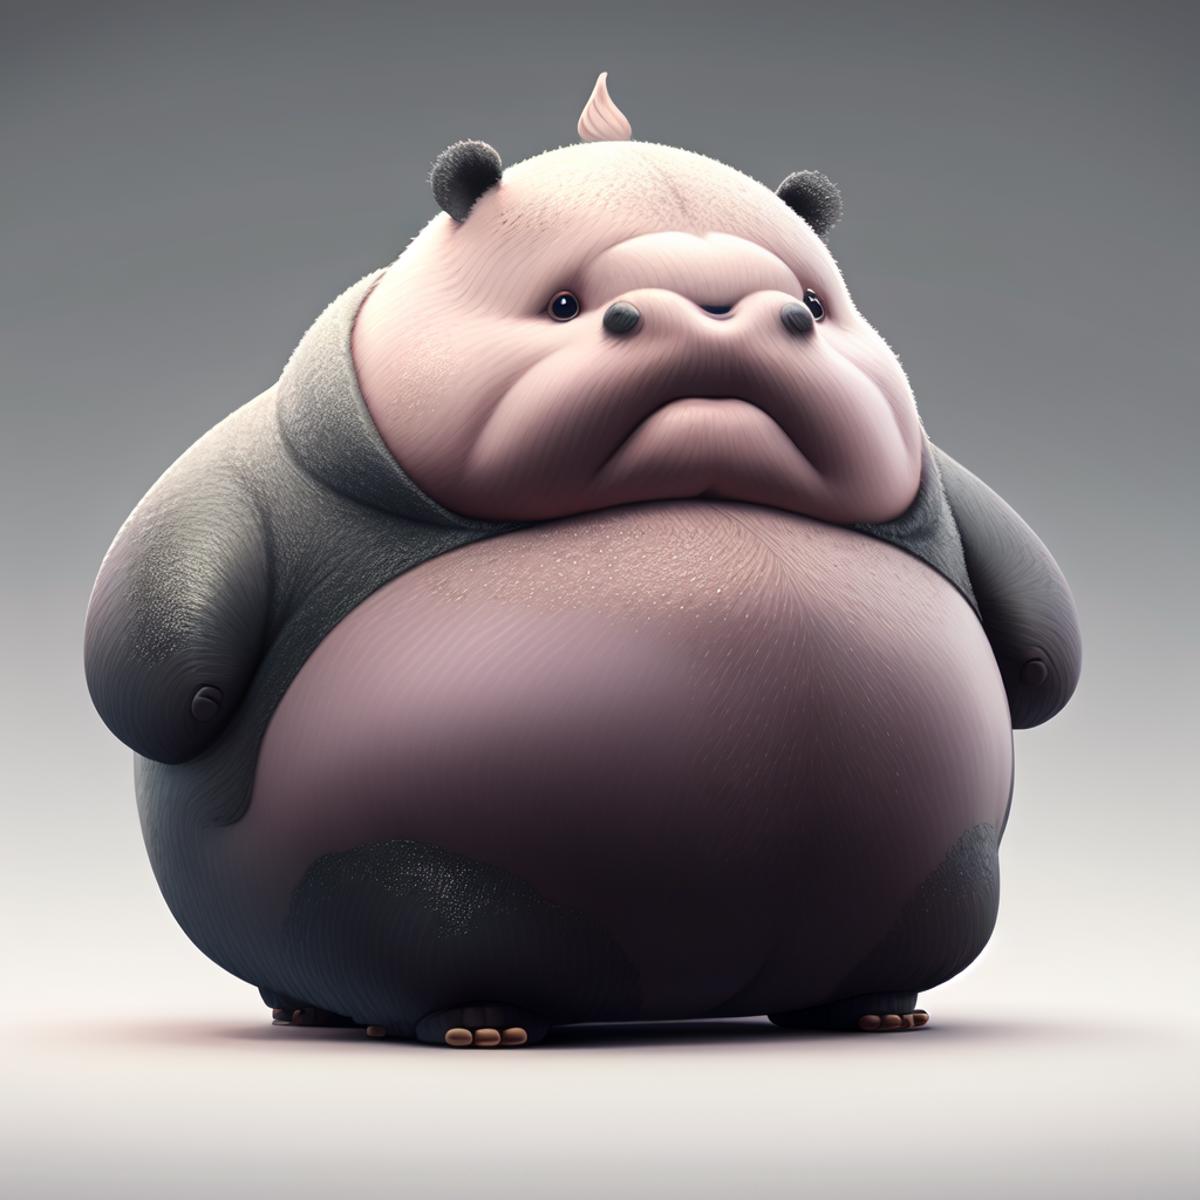 fat animal image by Cinsdia